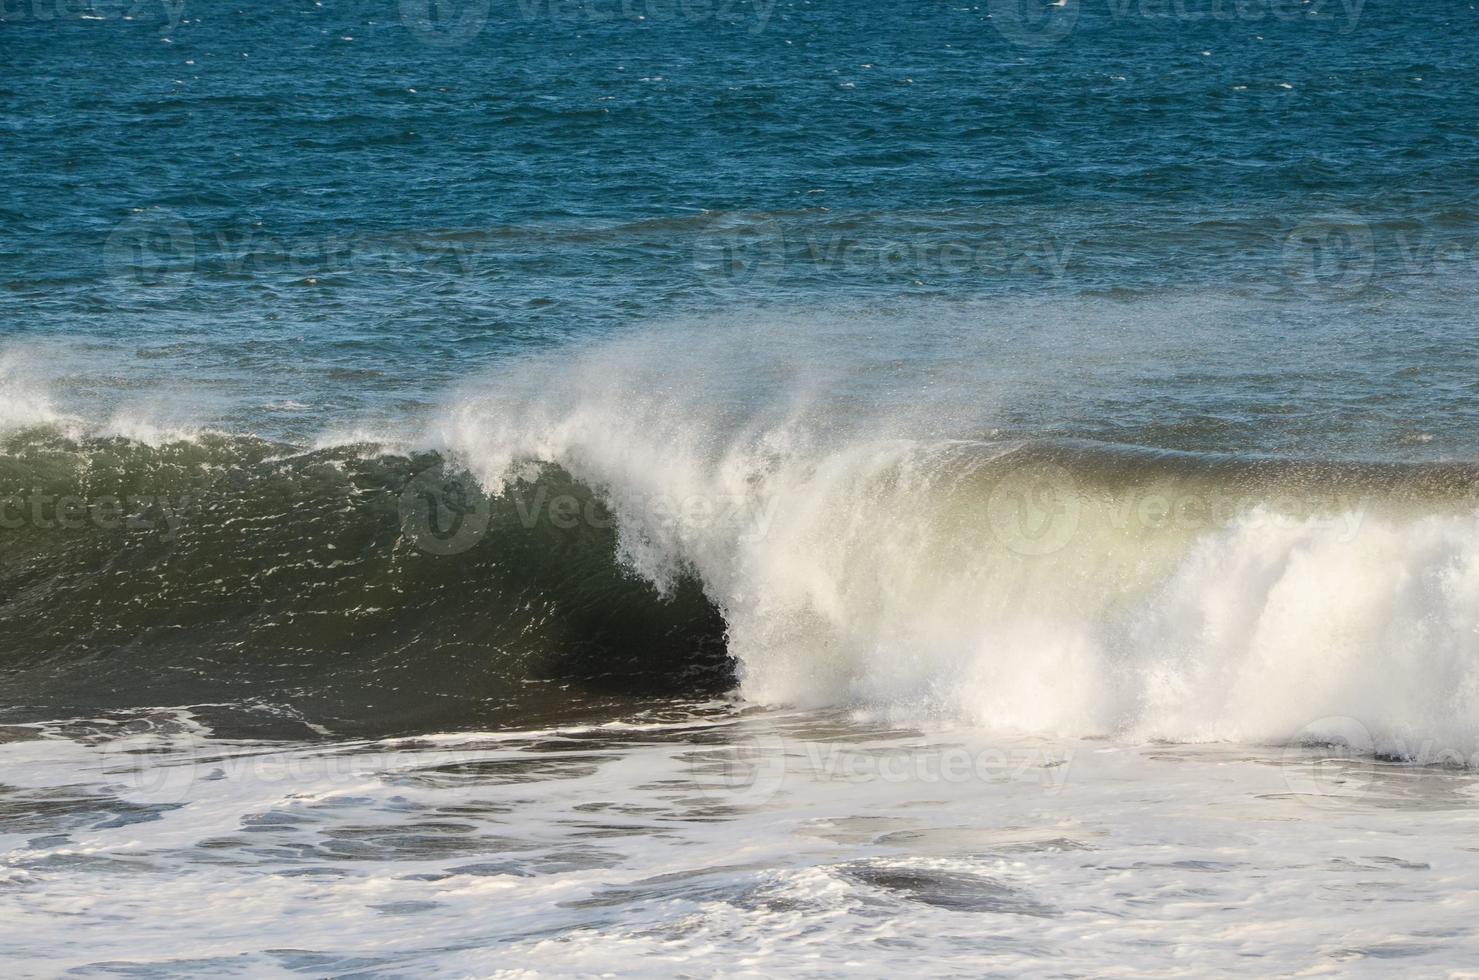 Strong waves close-up photo